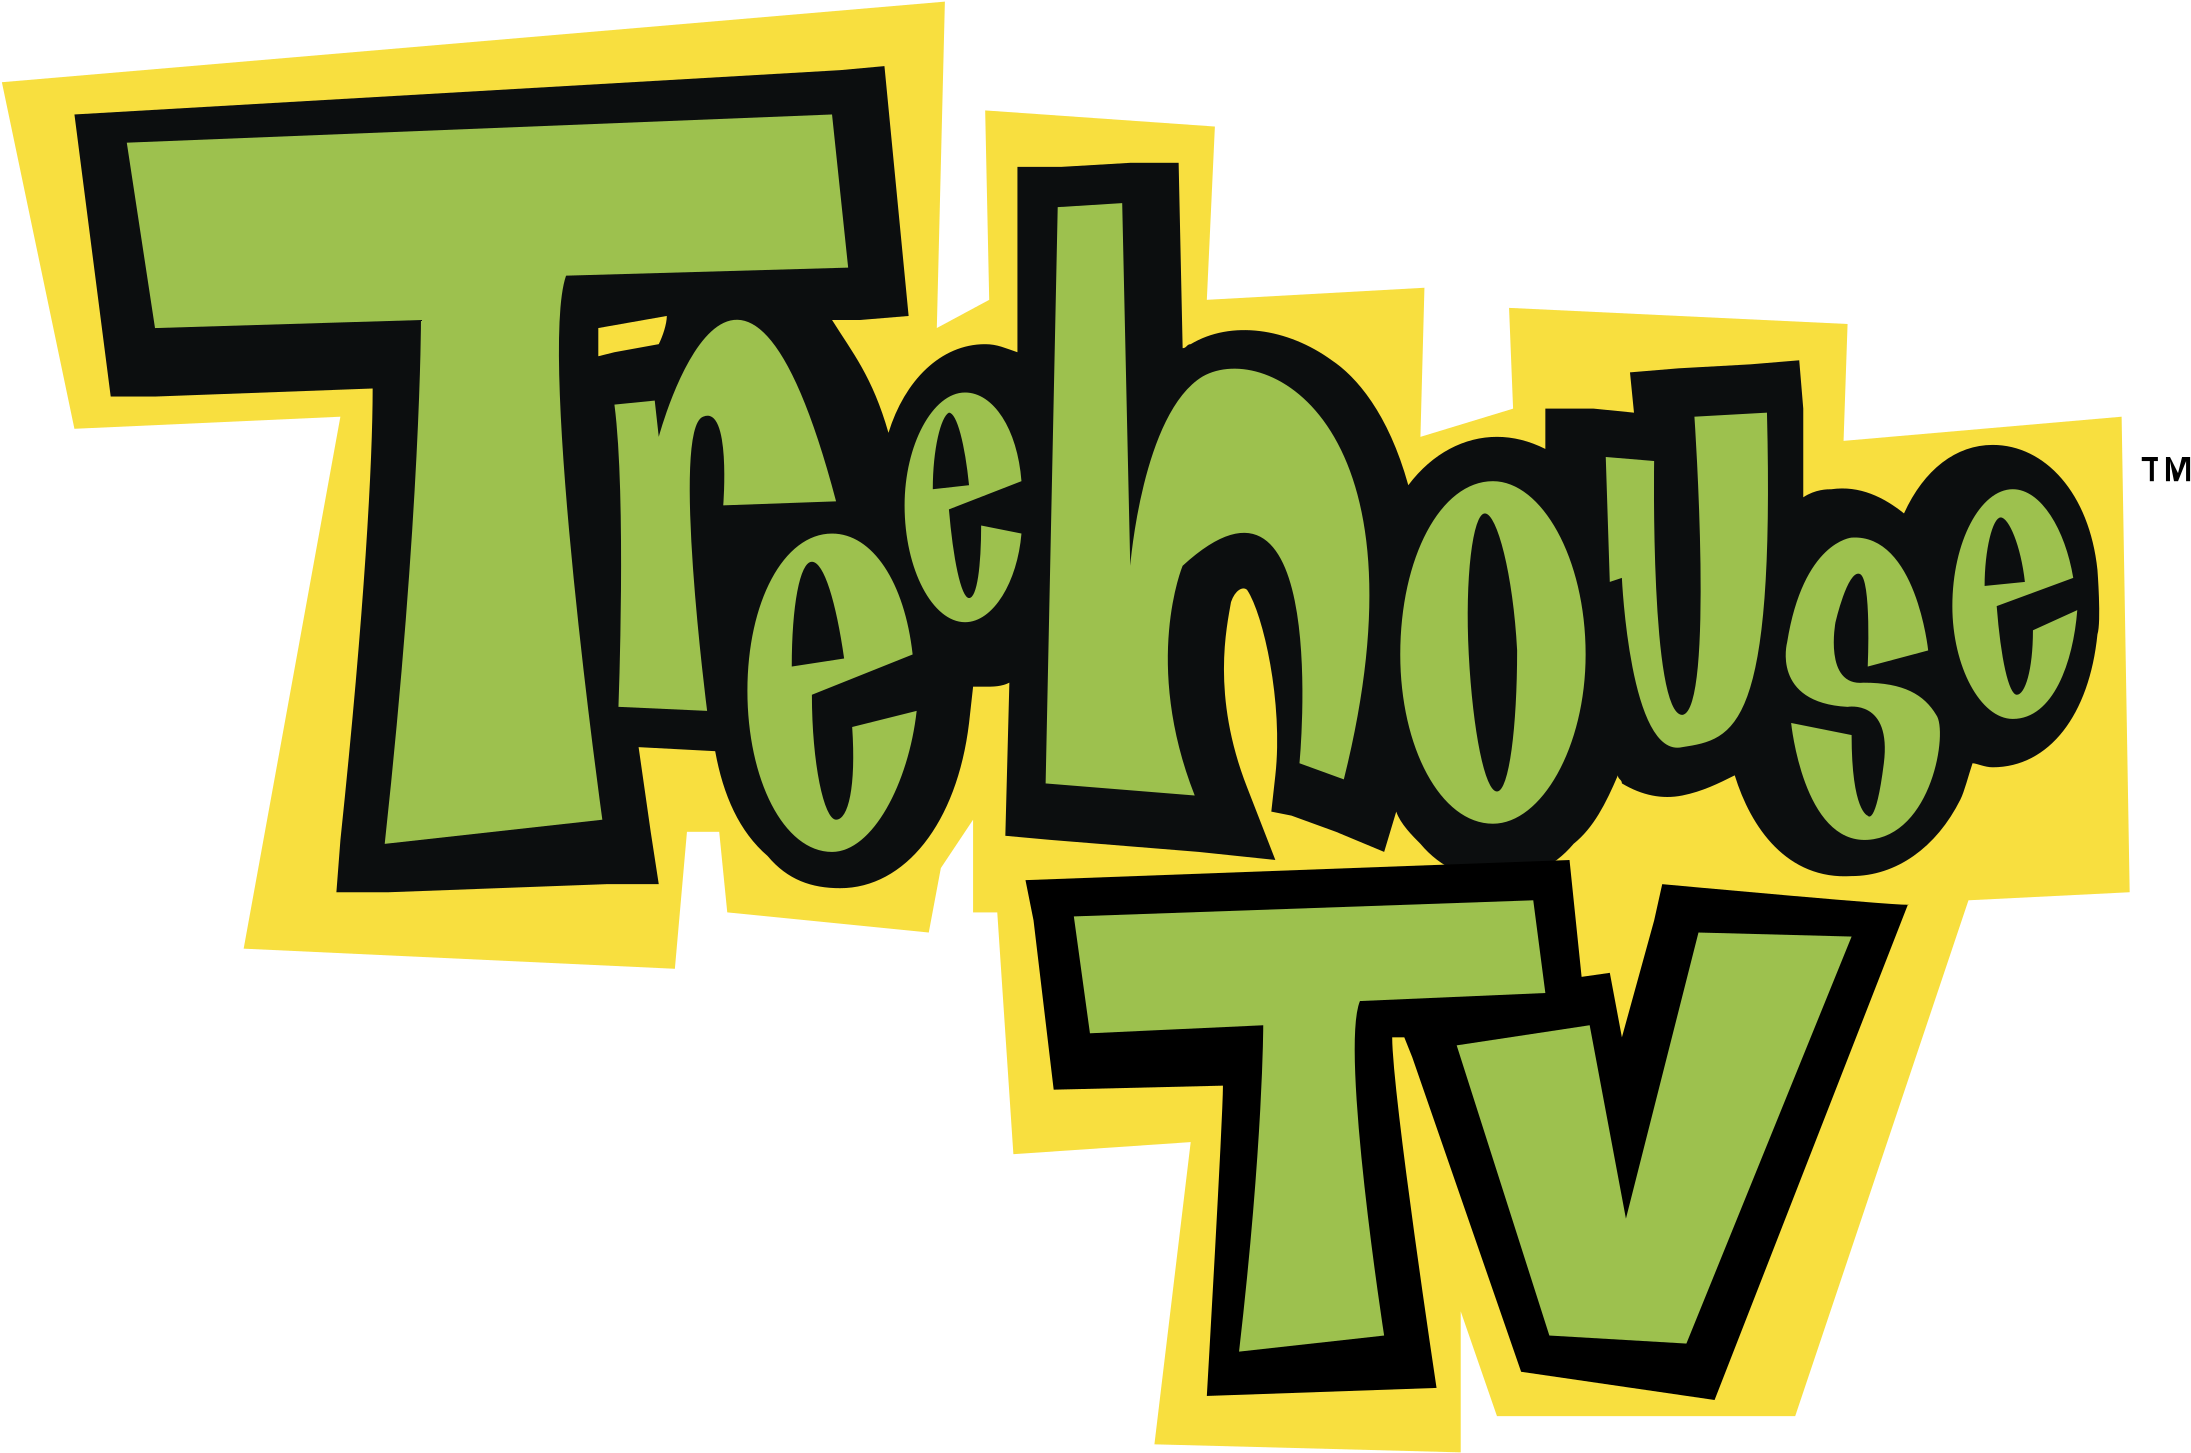 Treehouse Tv Logo - Treehouse Tv Logo 1999 (2400x2400)